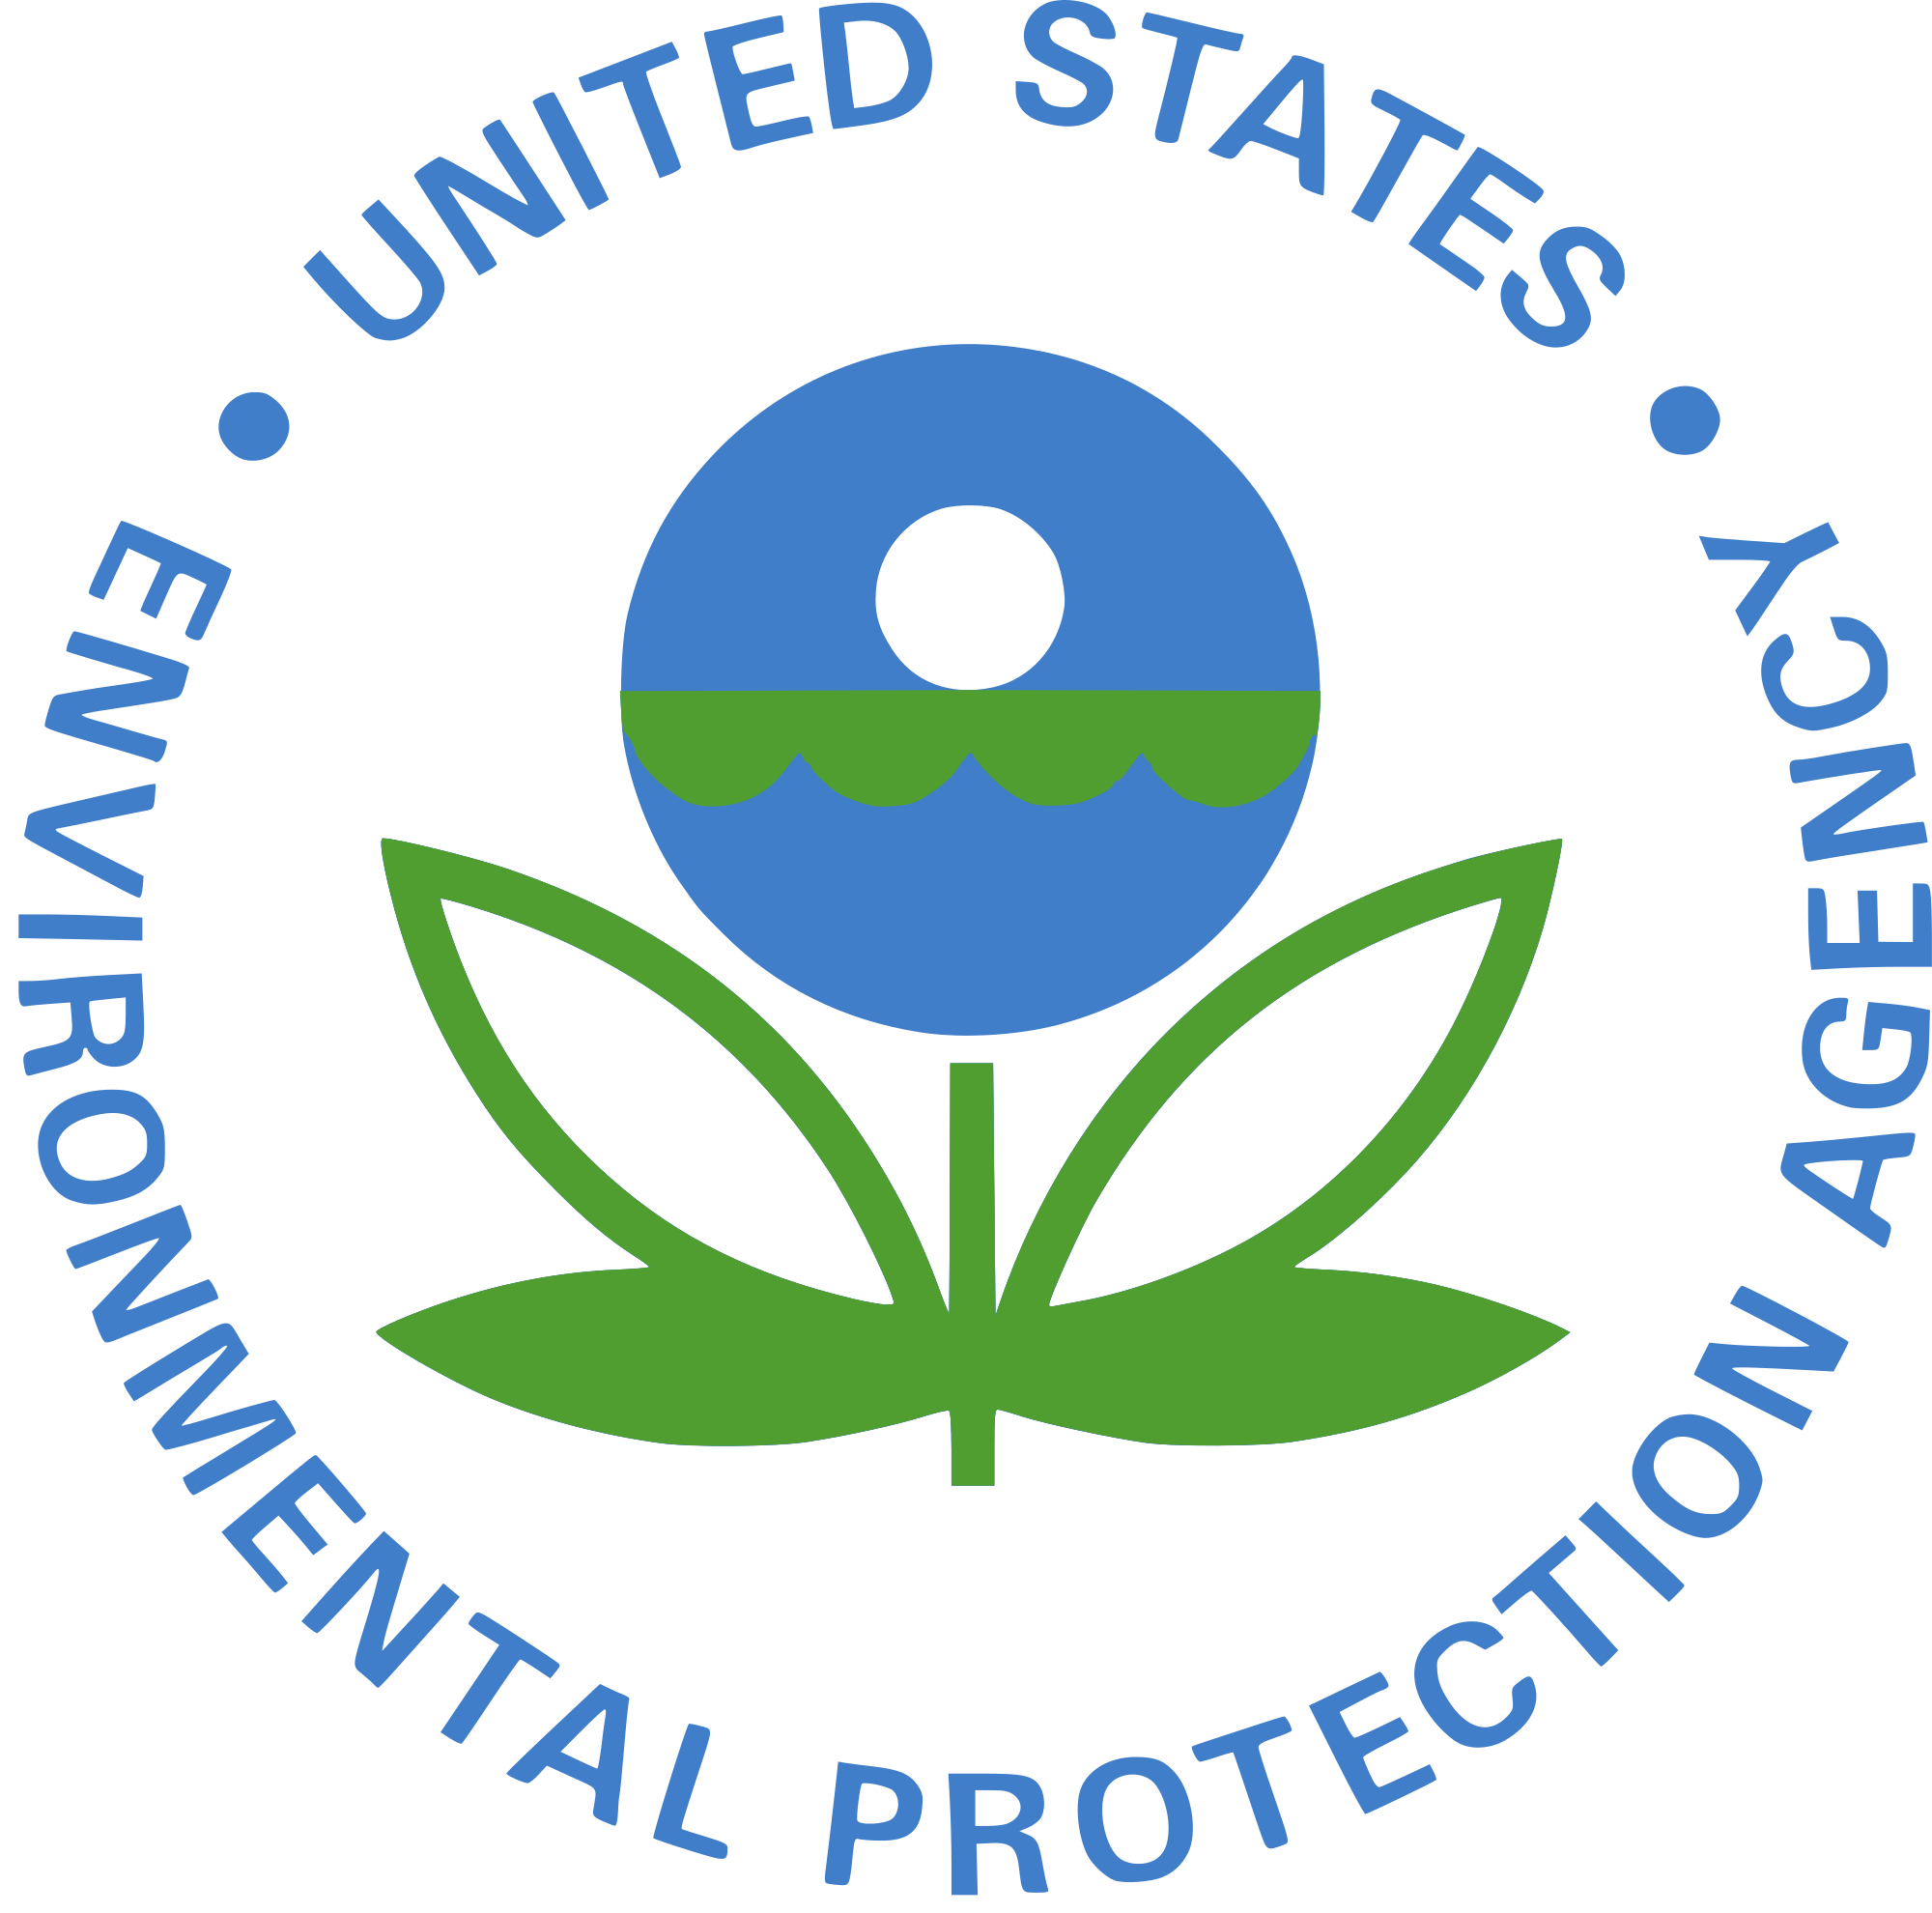 EPA Issues Interim Guidance Regarding Cleanups During COVID-19 Crisis